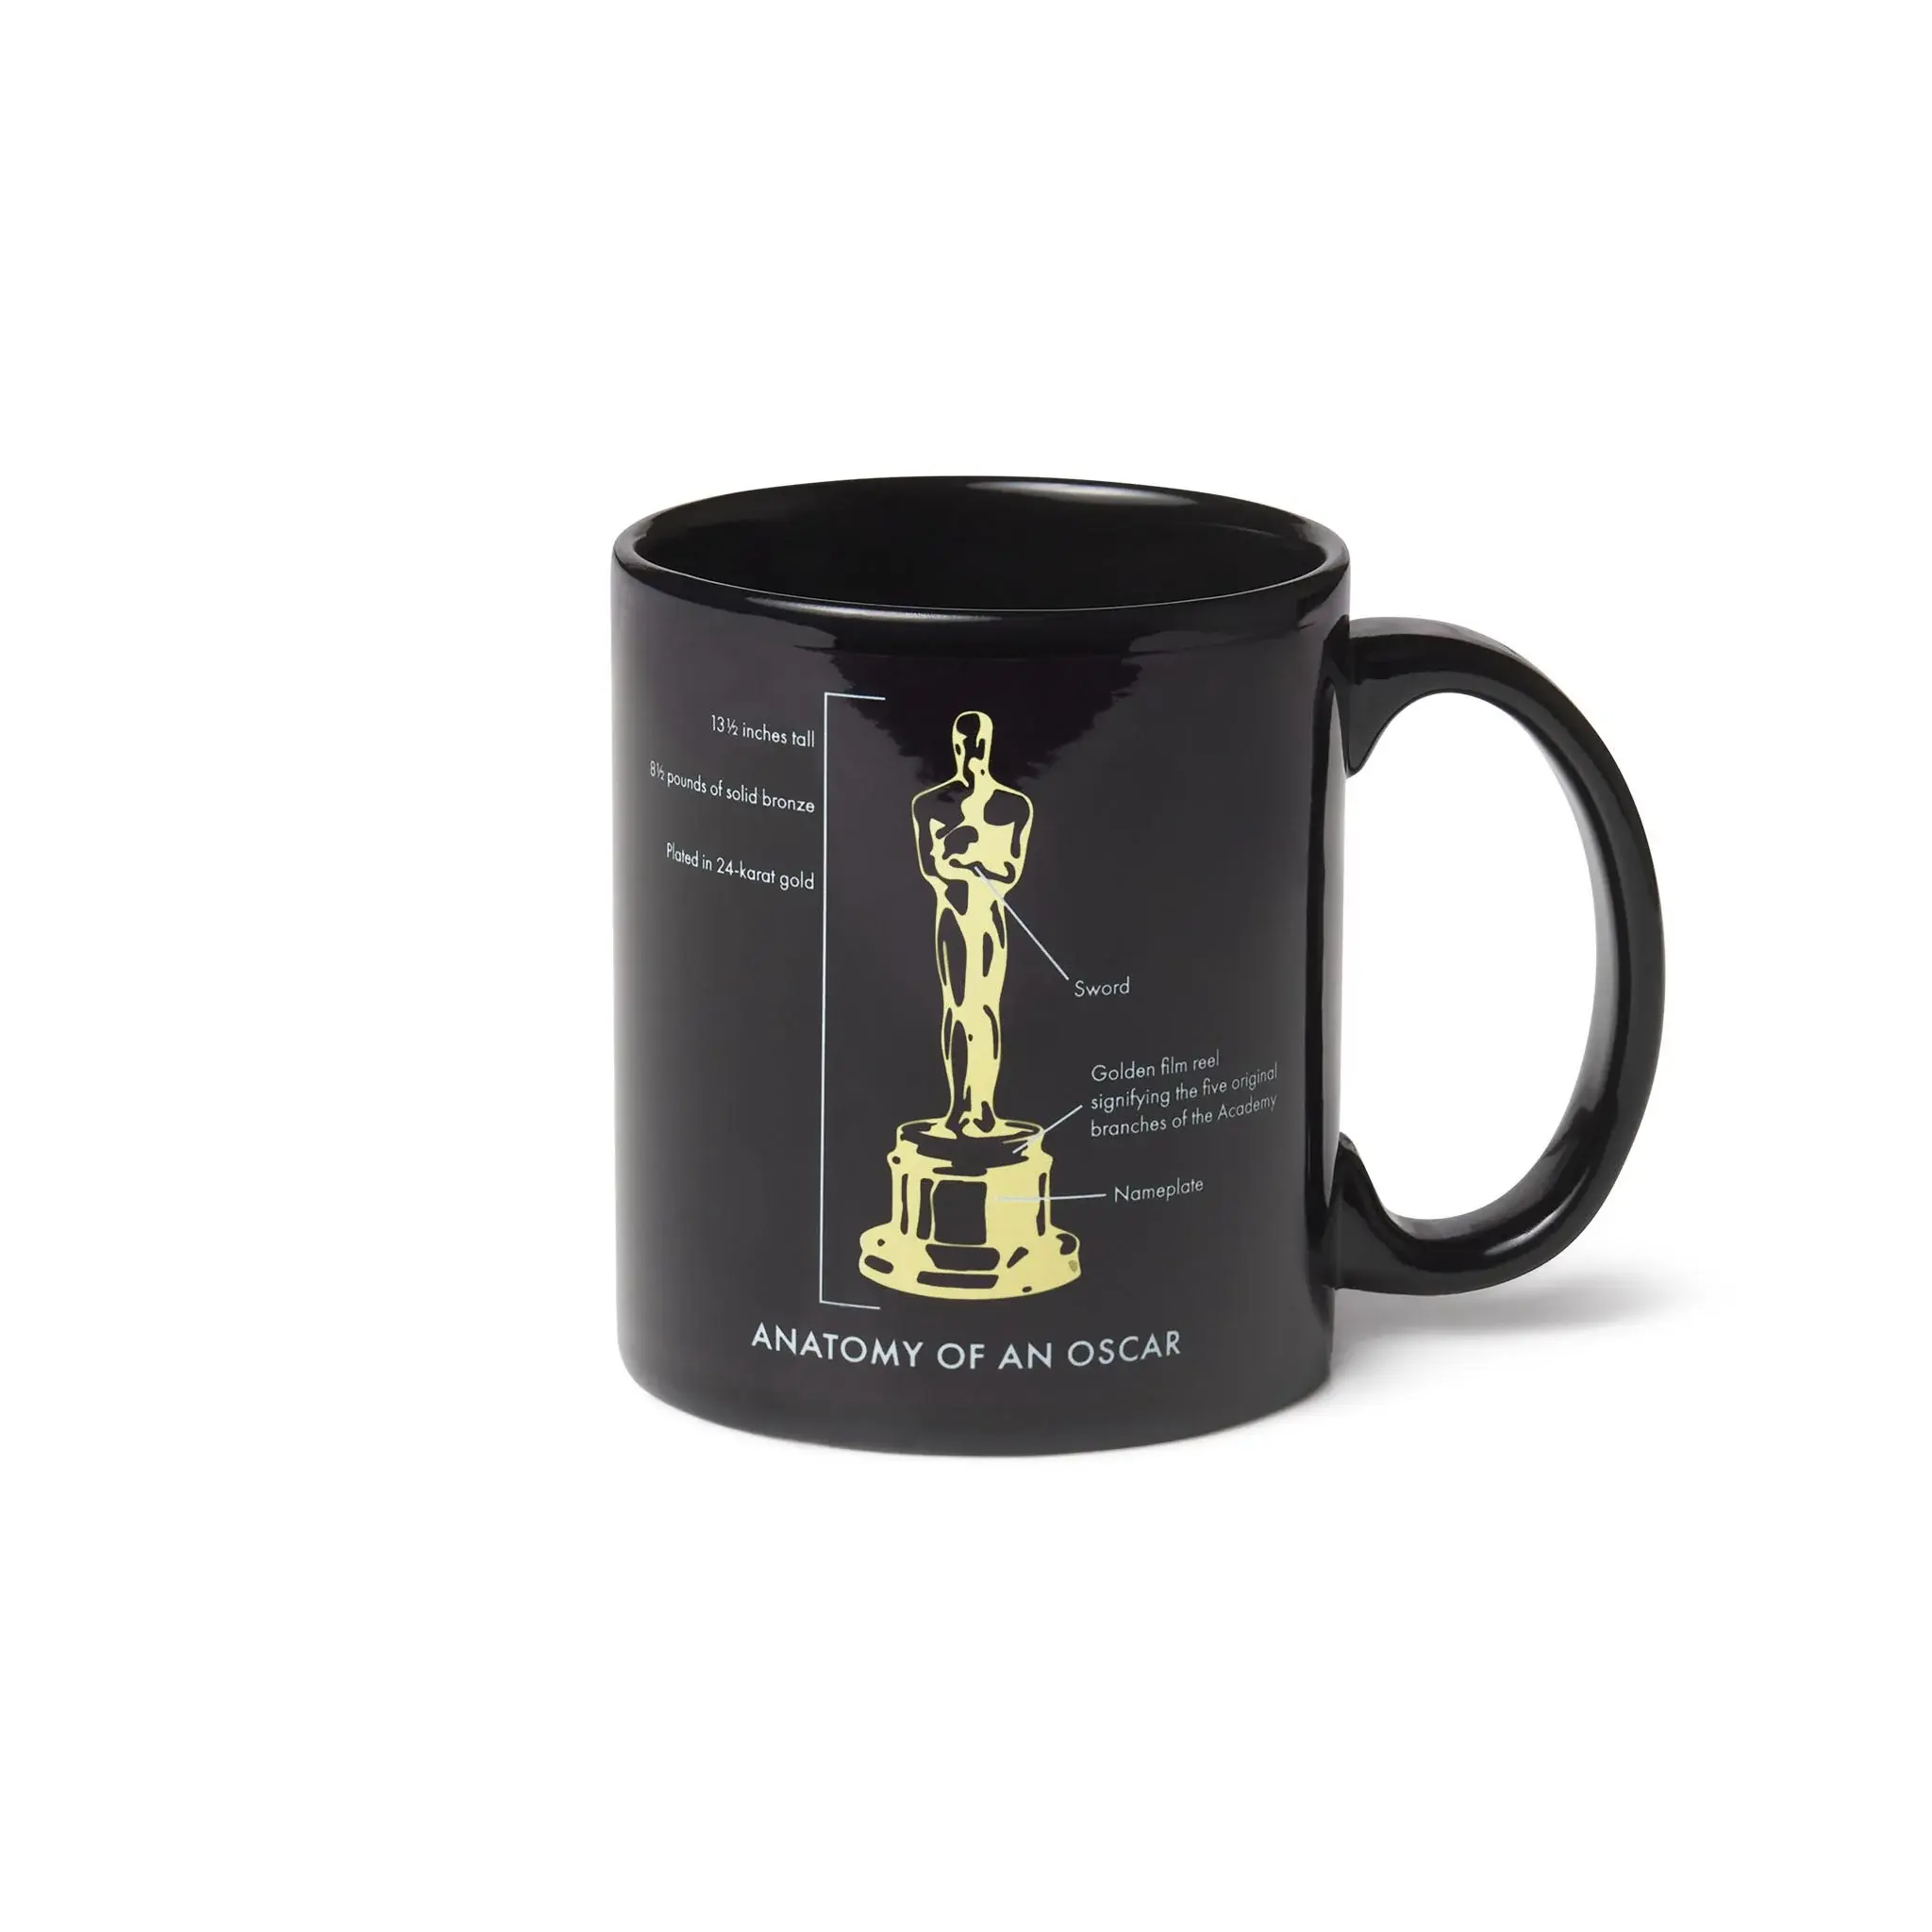 Anatomy of an Oscar Mug